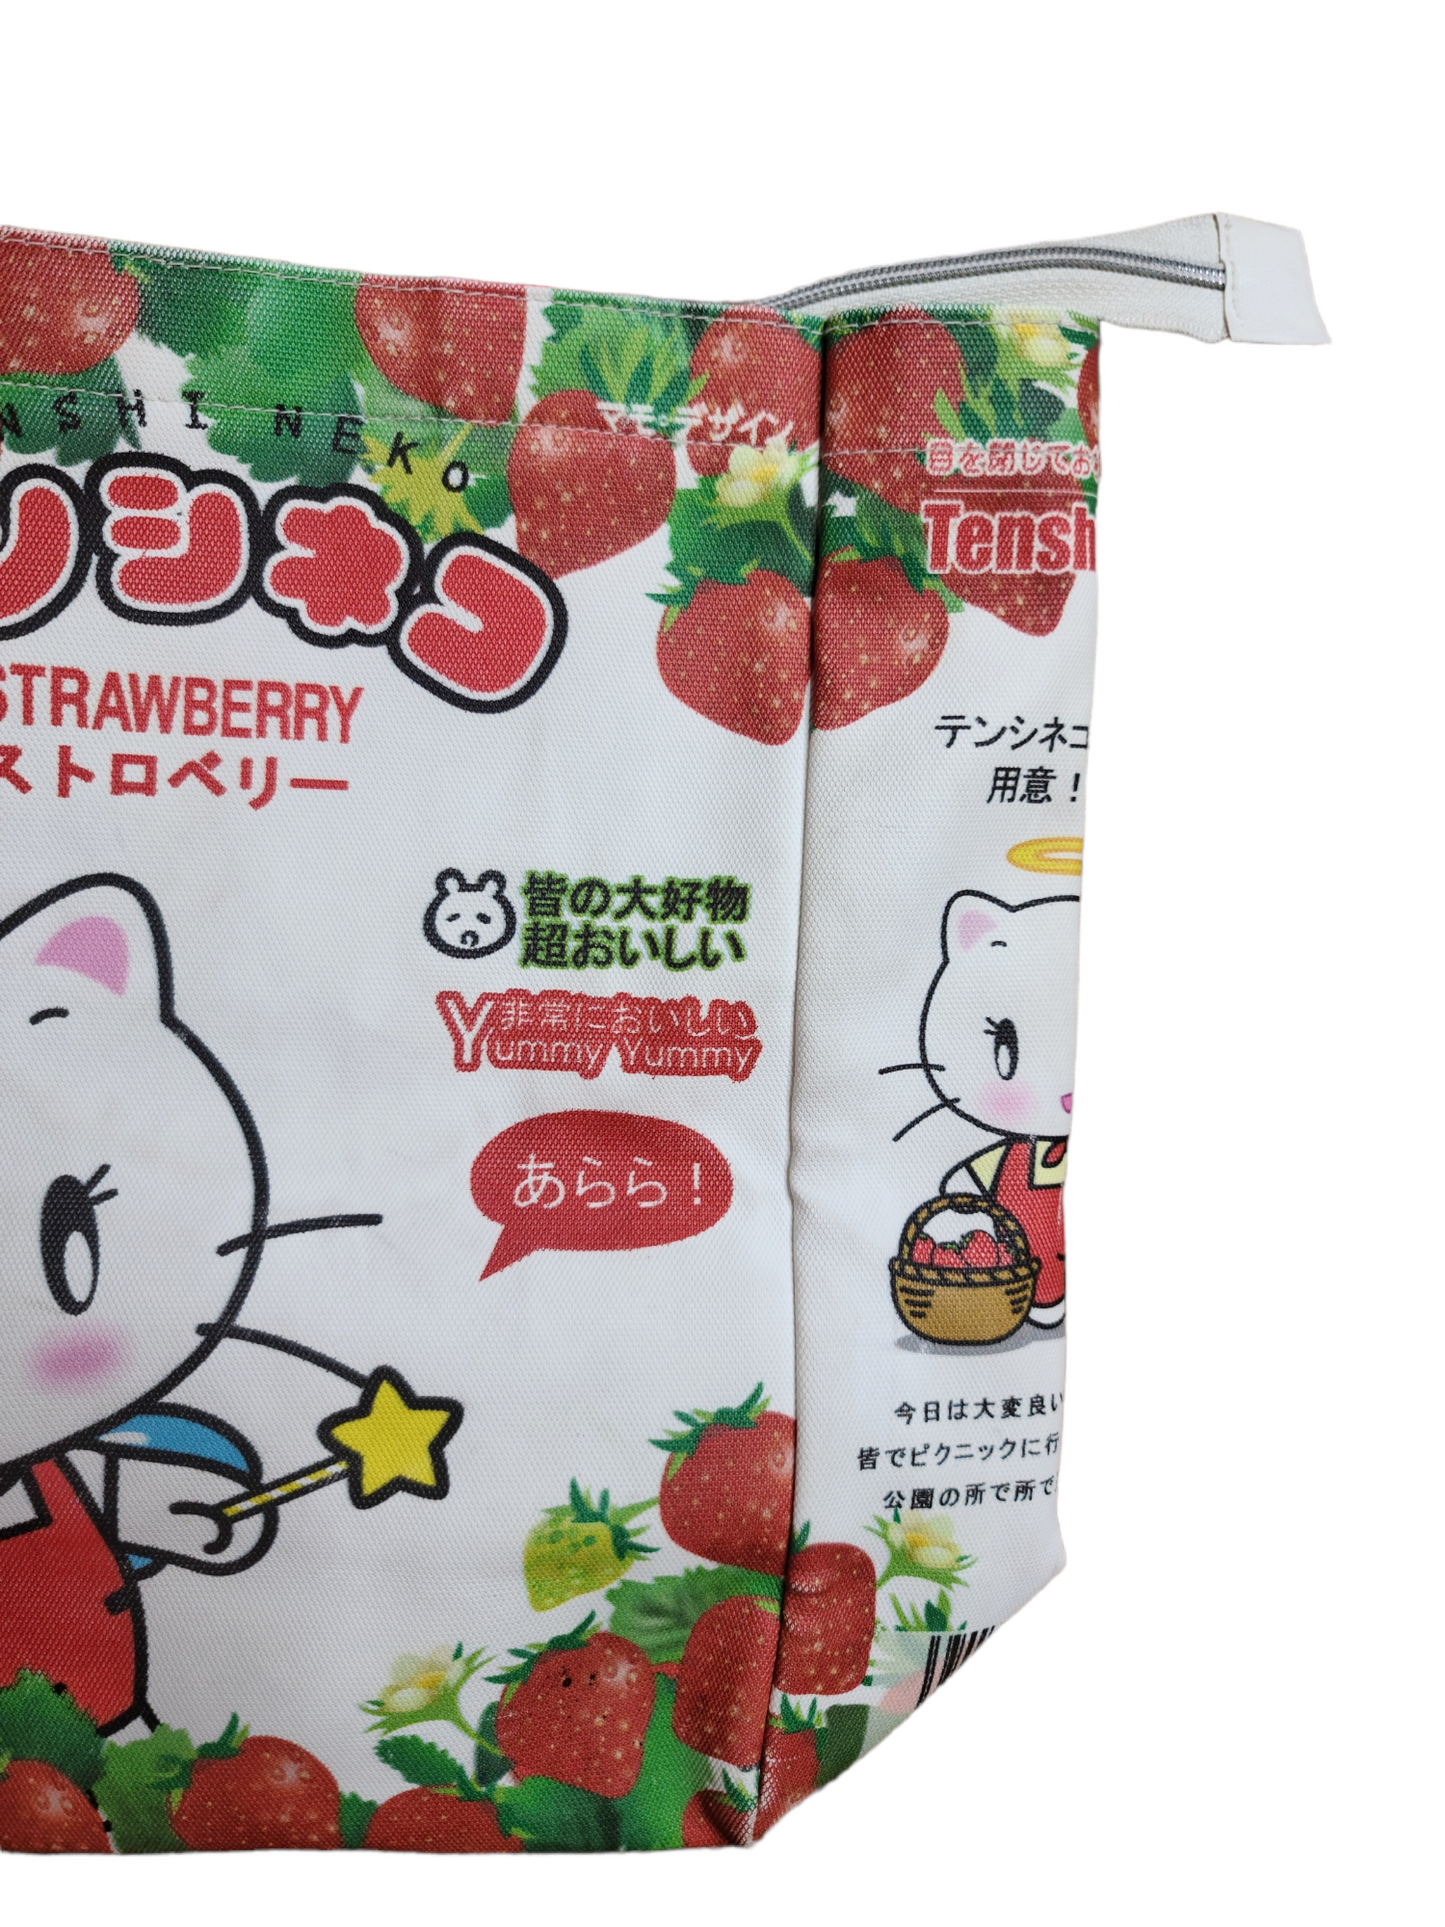 Harajuku printed bag fraises